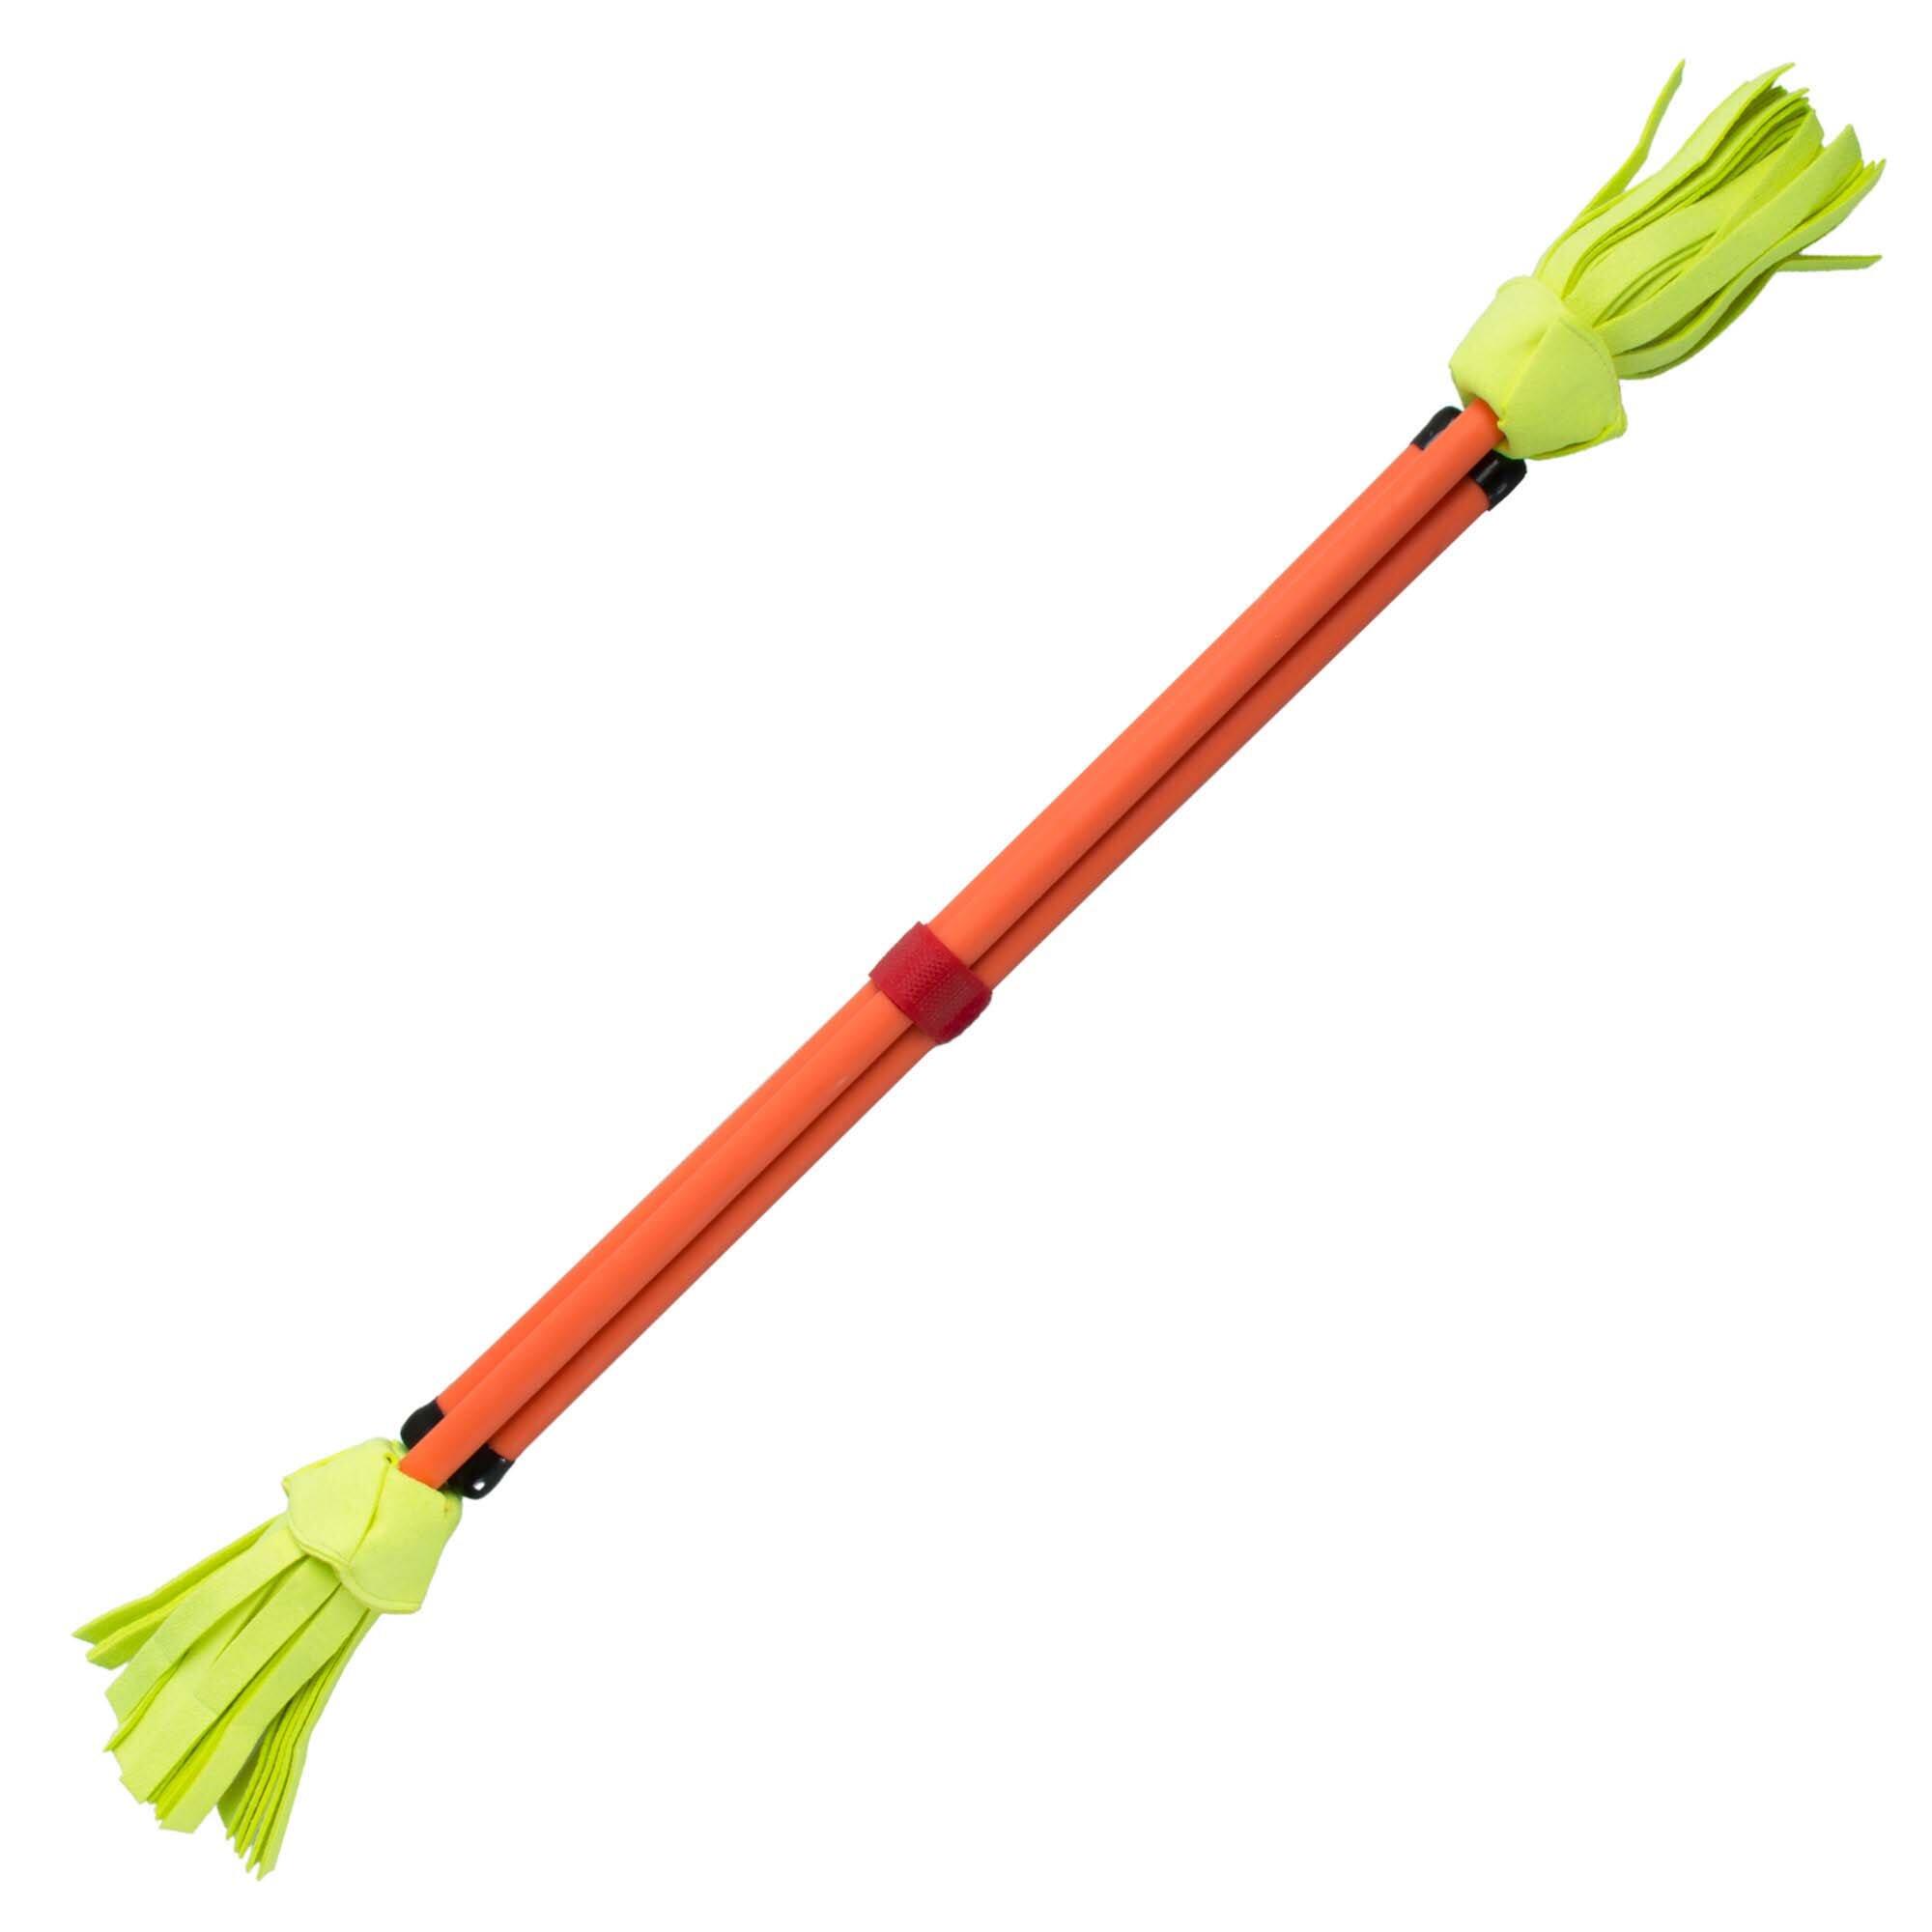 Neo Fluoro Flower Stick and Hand Sticks-Orange with Yellow Tassels 1/3